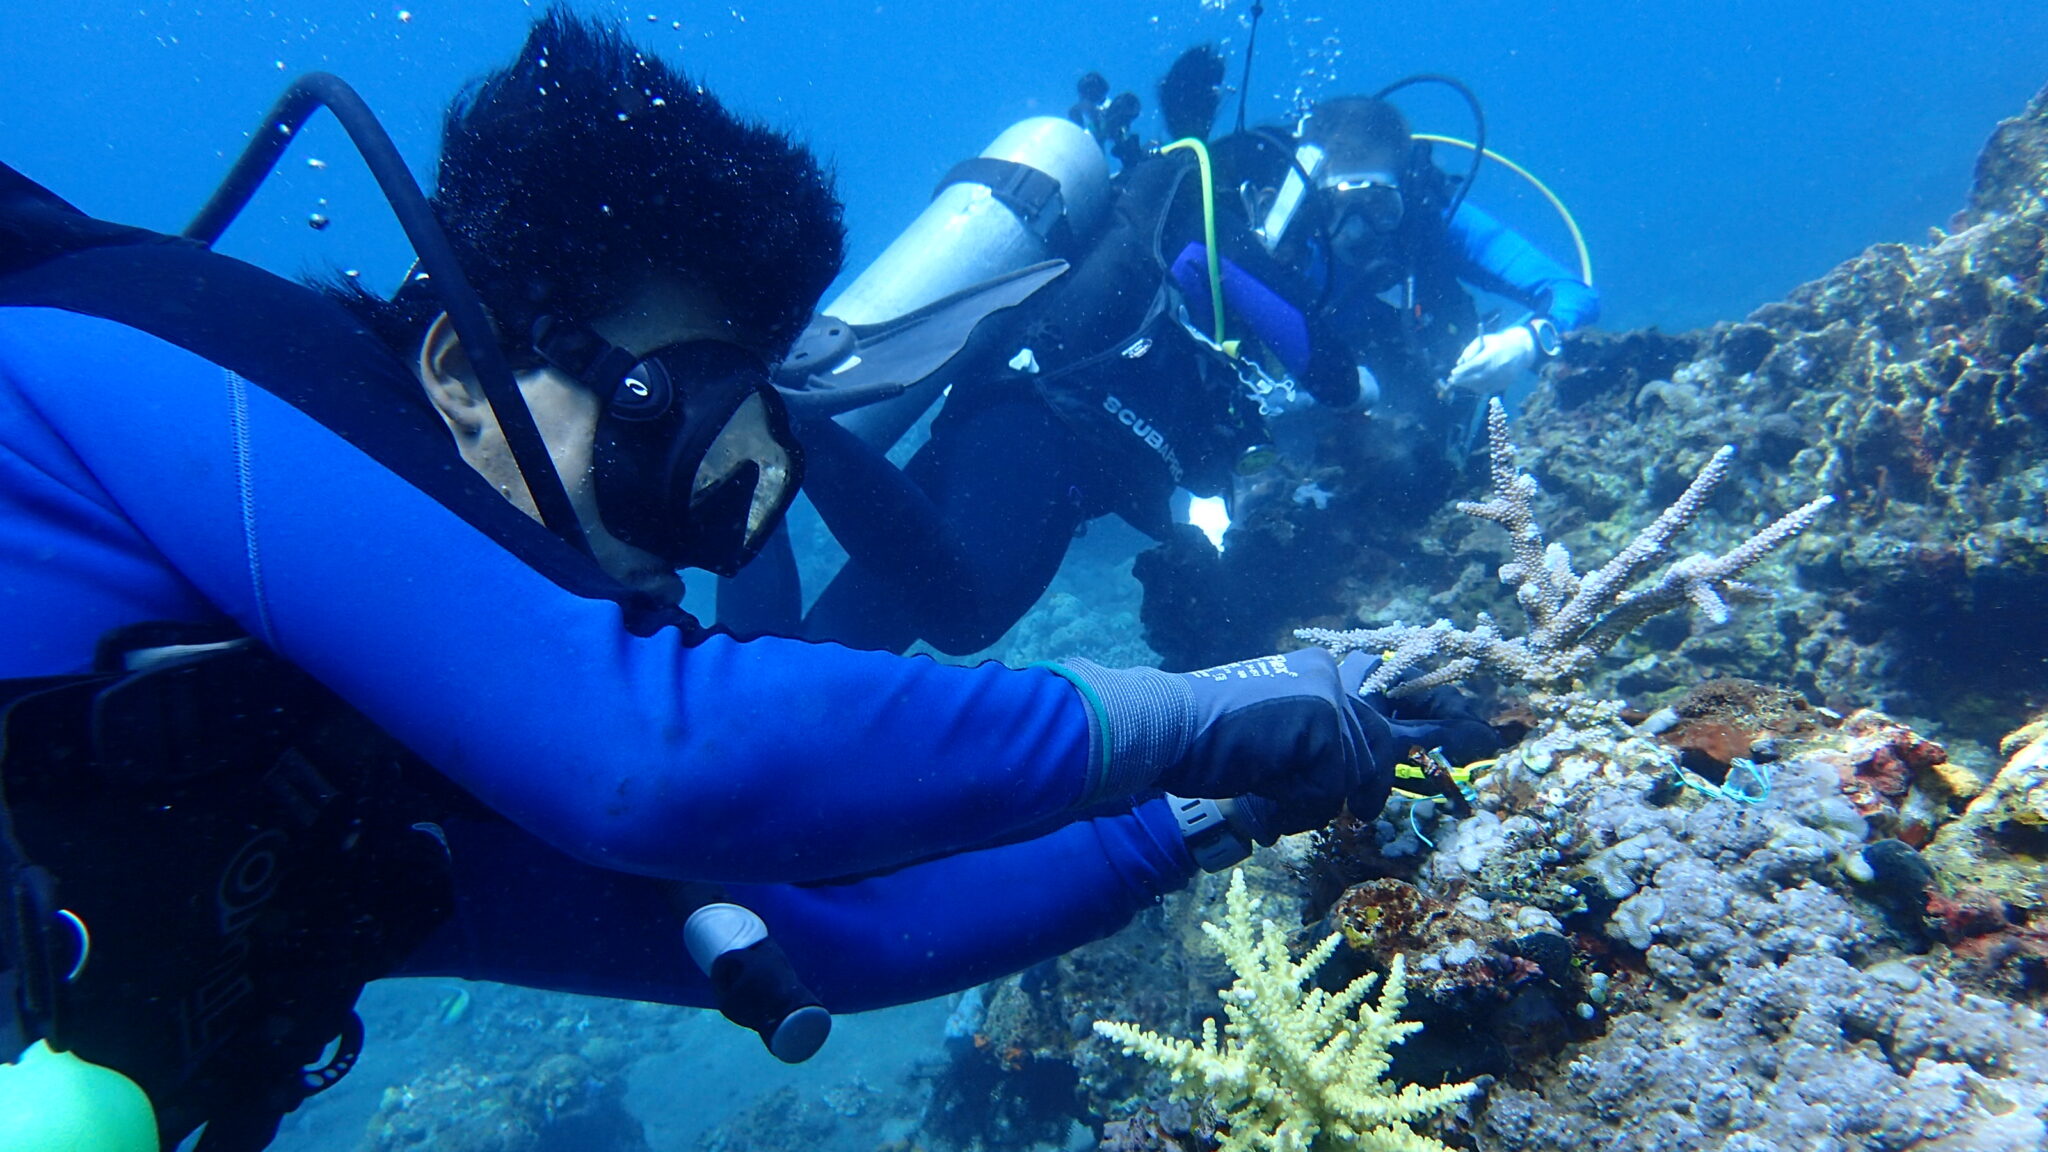 Sea Communities doing coral transplant work